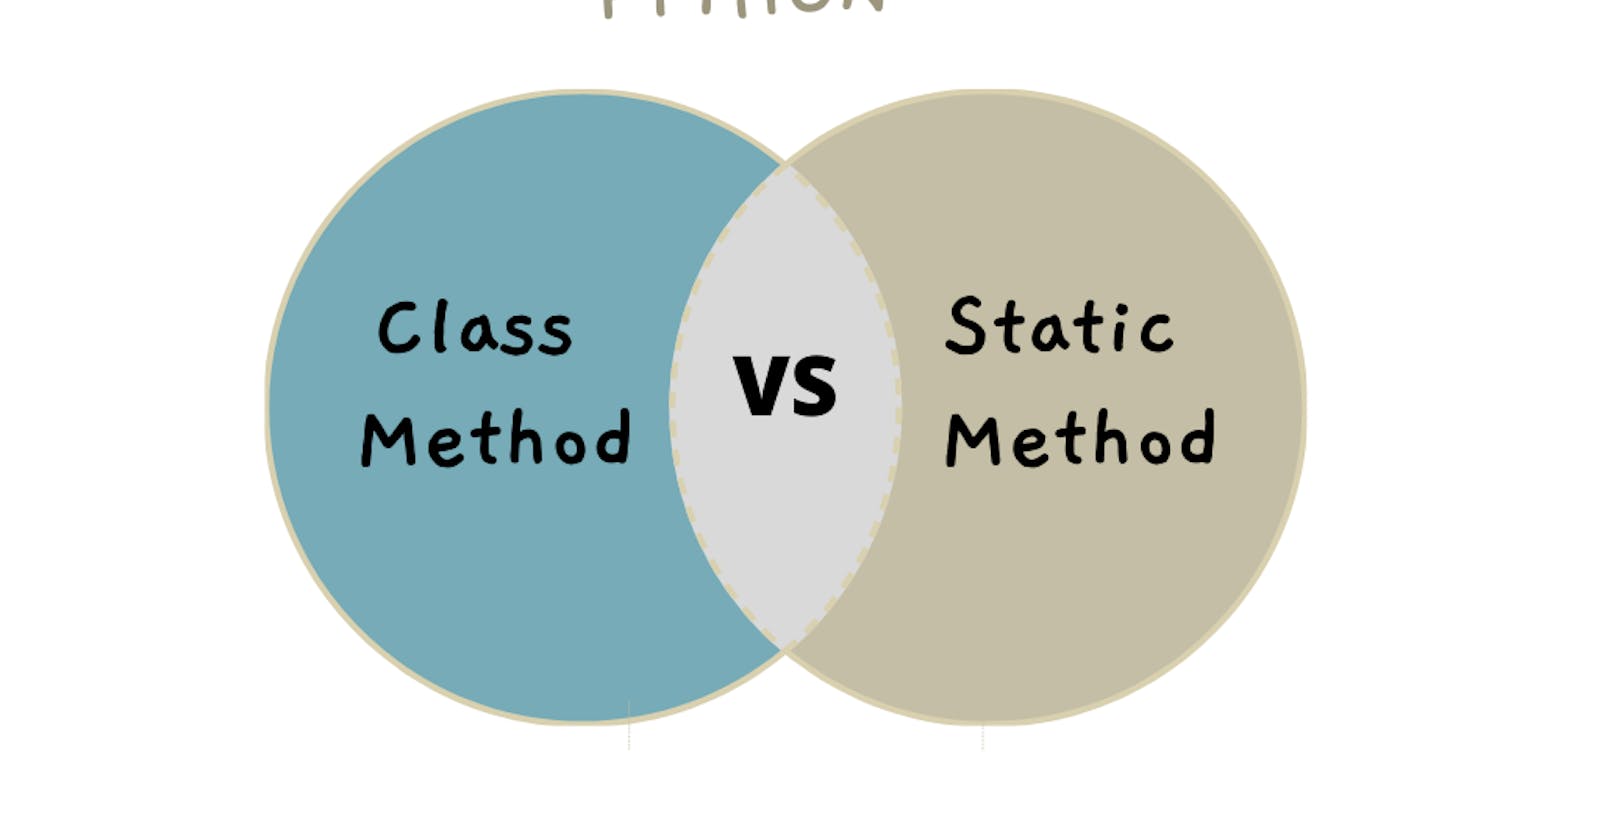 Class method vs Static method in Python